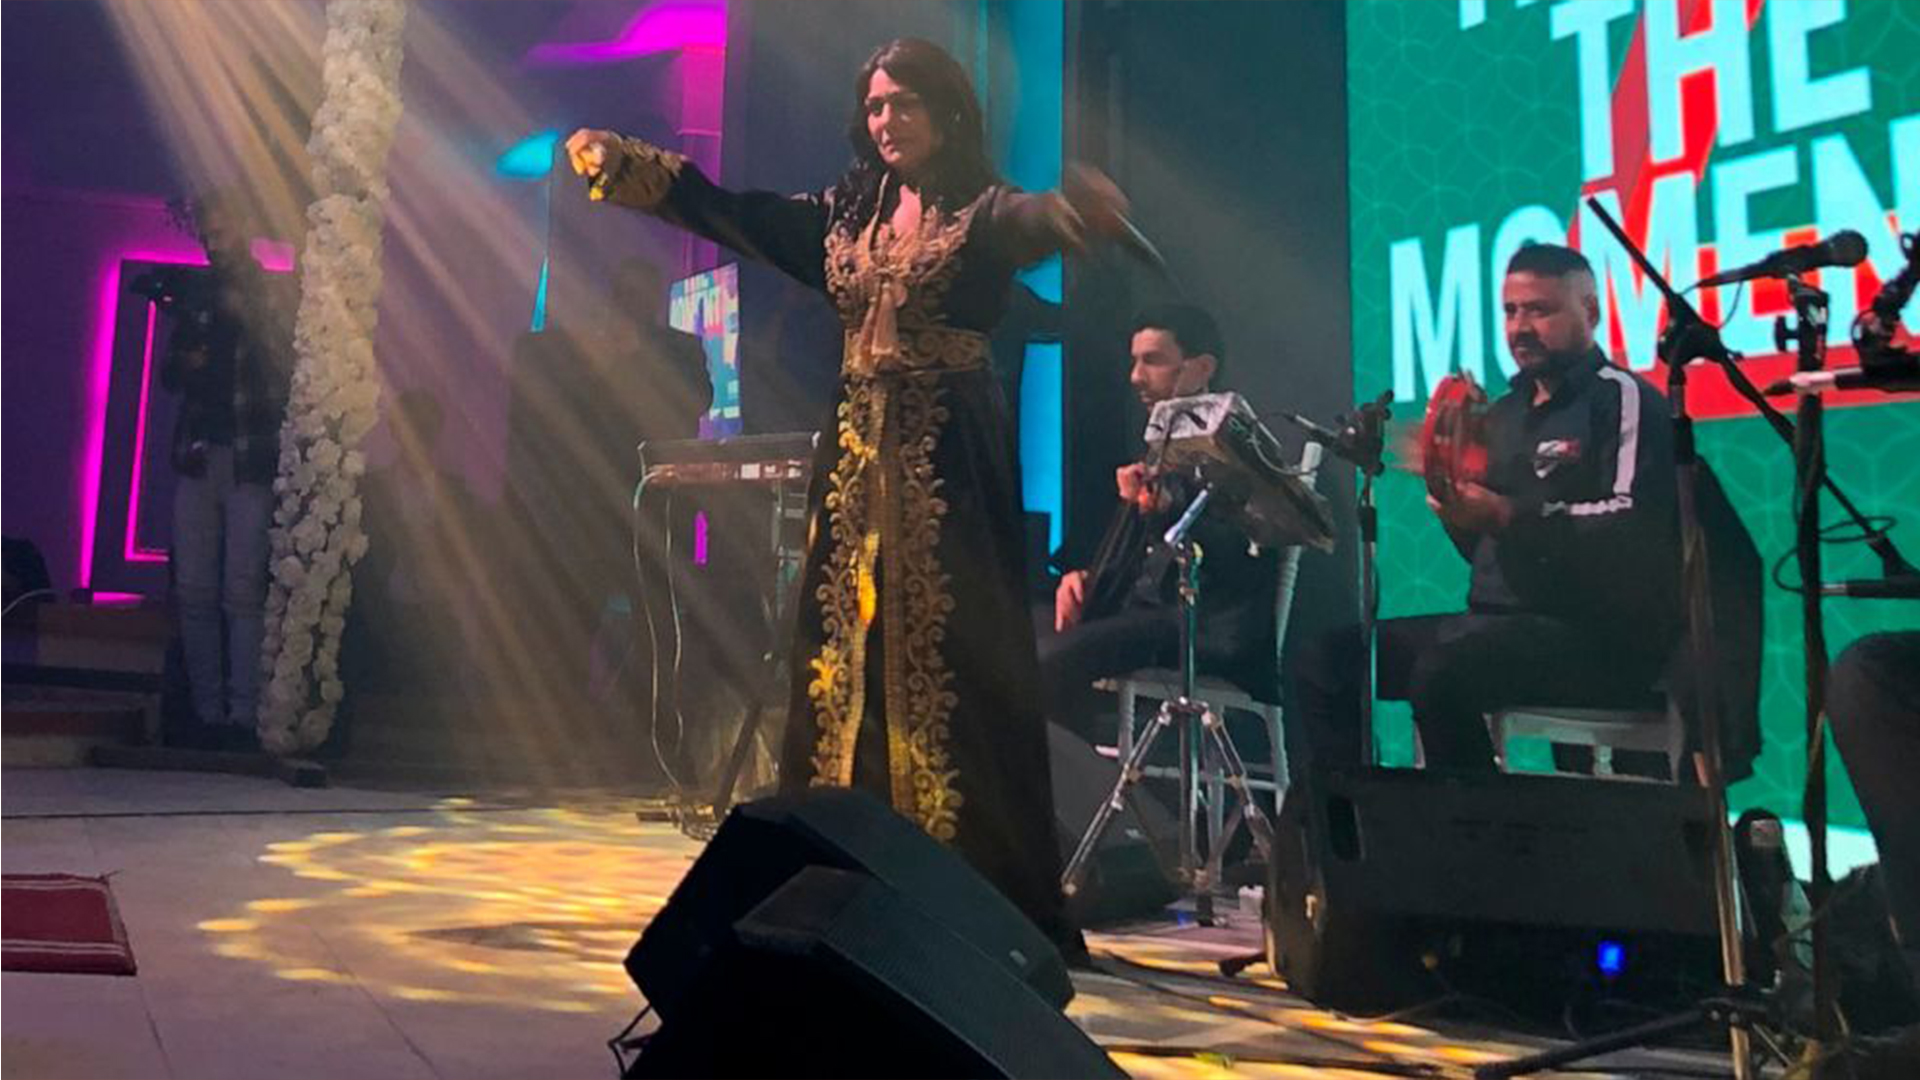  Iraqi singer Sajda Obeid gives a concert at the "Yarmouk Club" in Baghdad, Iraq, Monday, Dec. 13, 2021. (AP Photo/Samya Kullab)